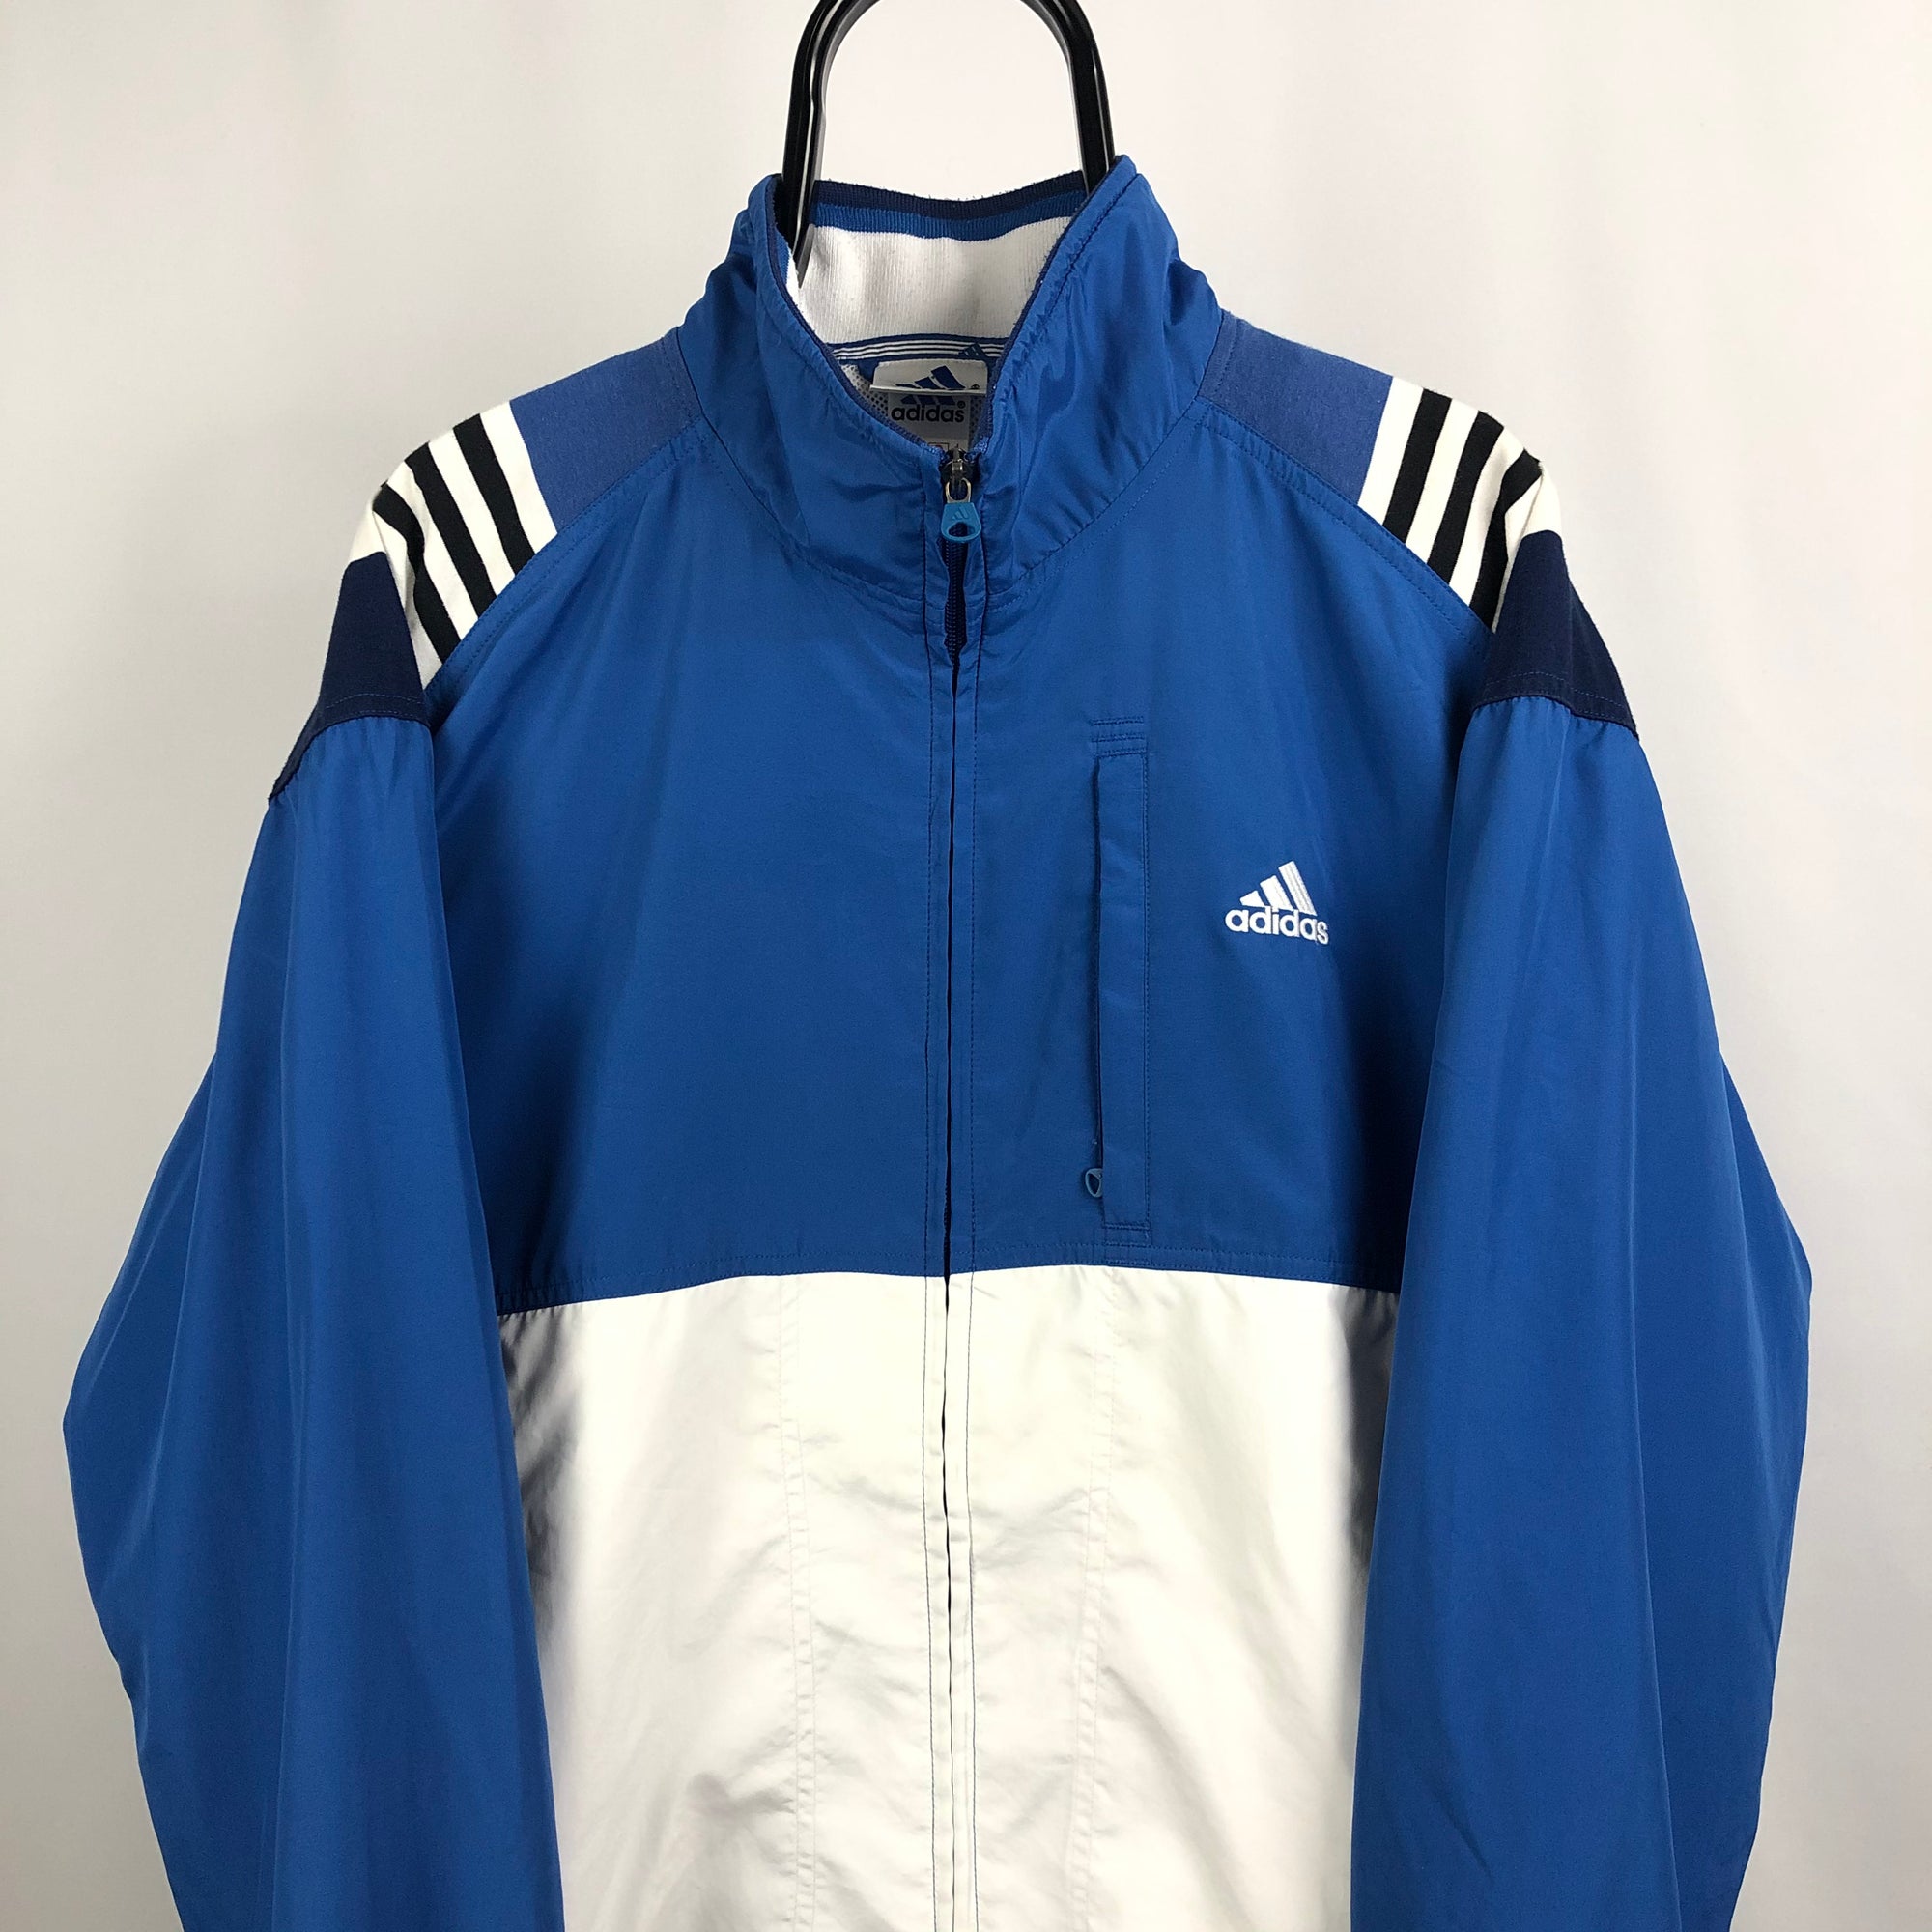 Vintage 90s Adidas Track Jacket in Blue/White - Men's Large/Women's XL